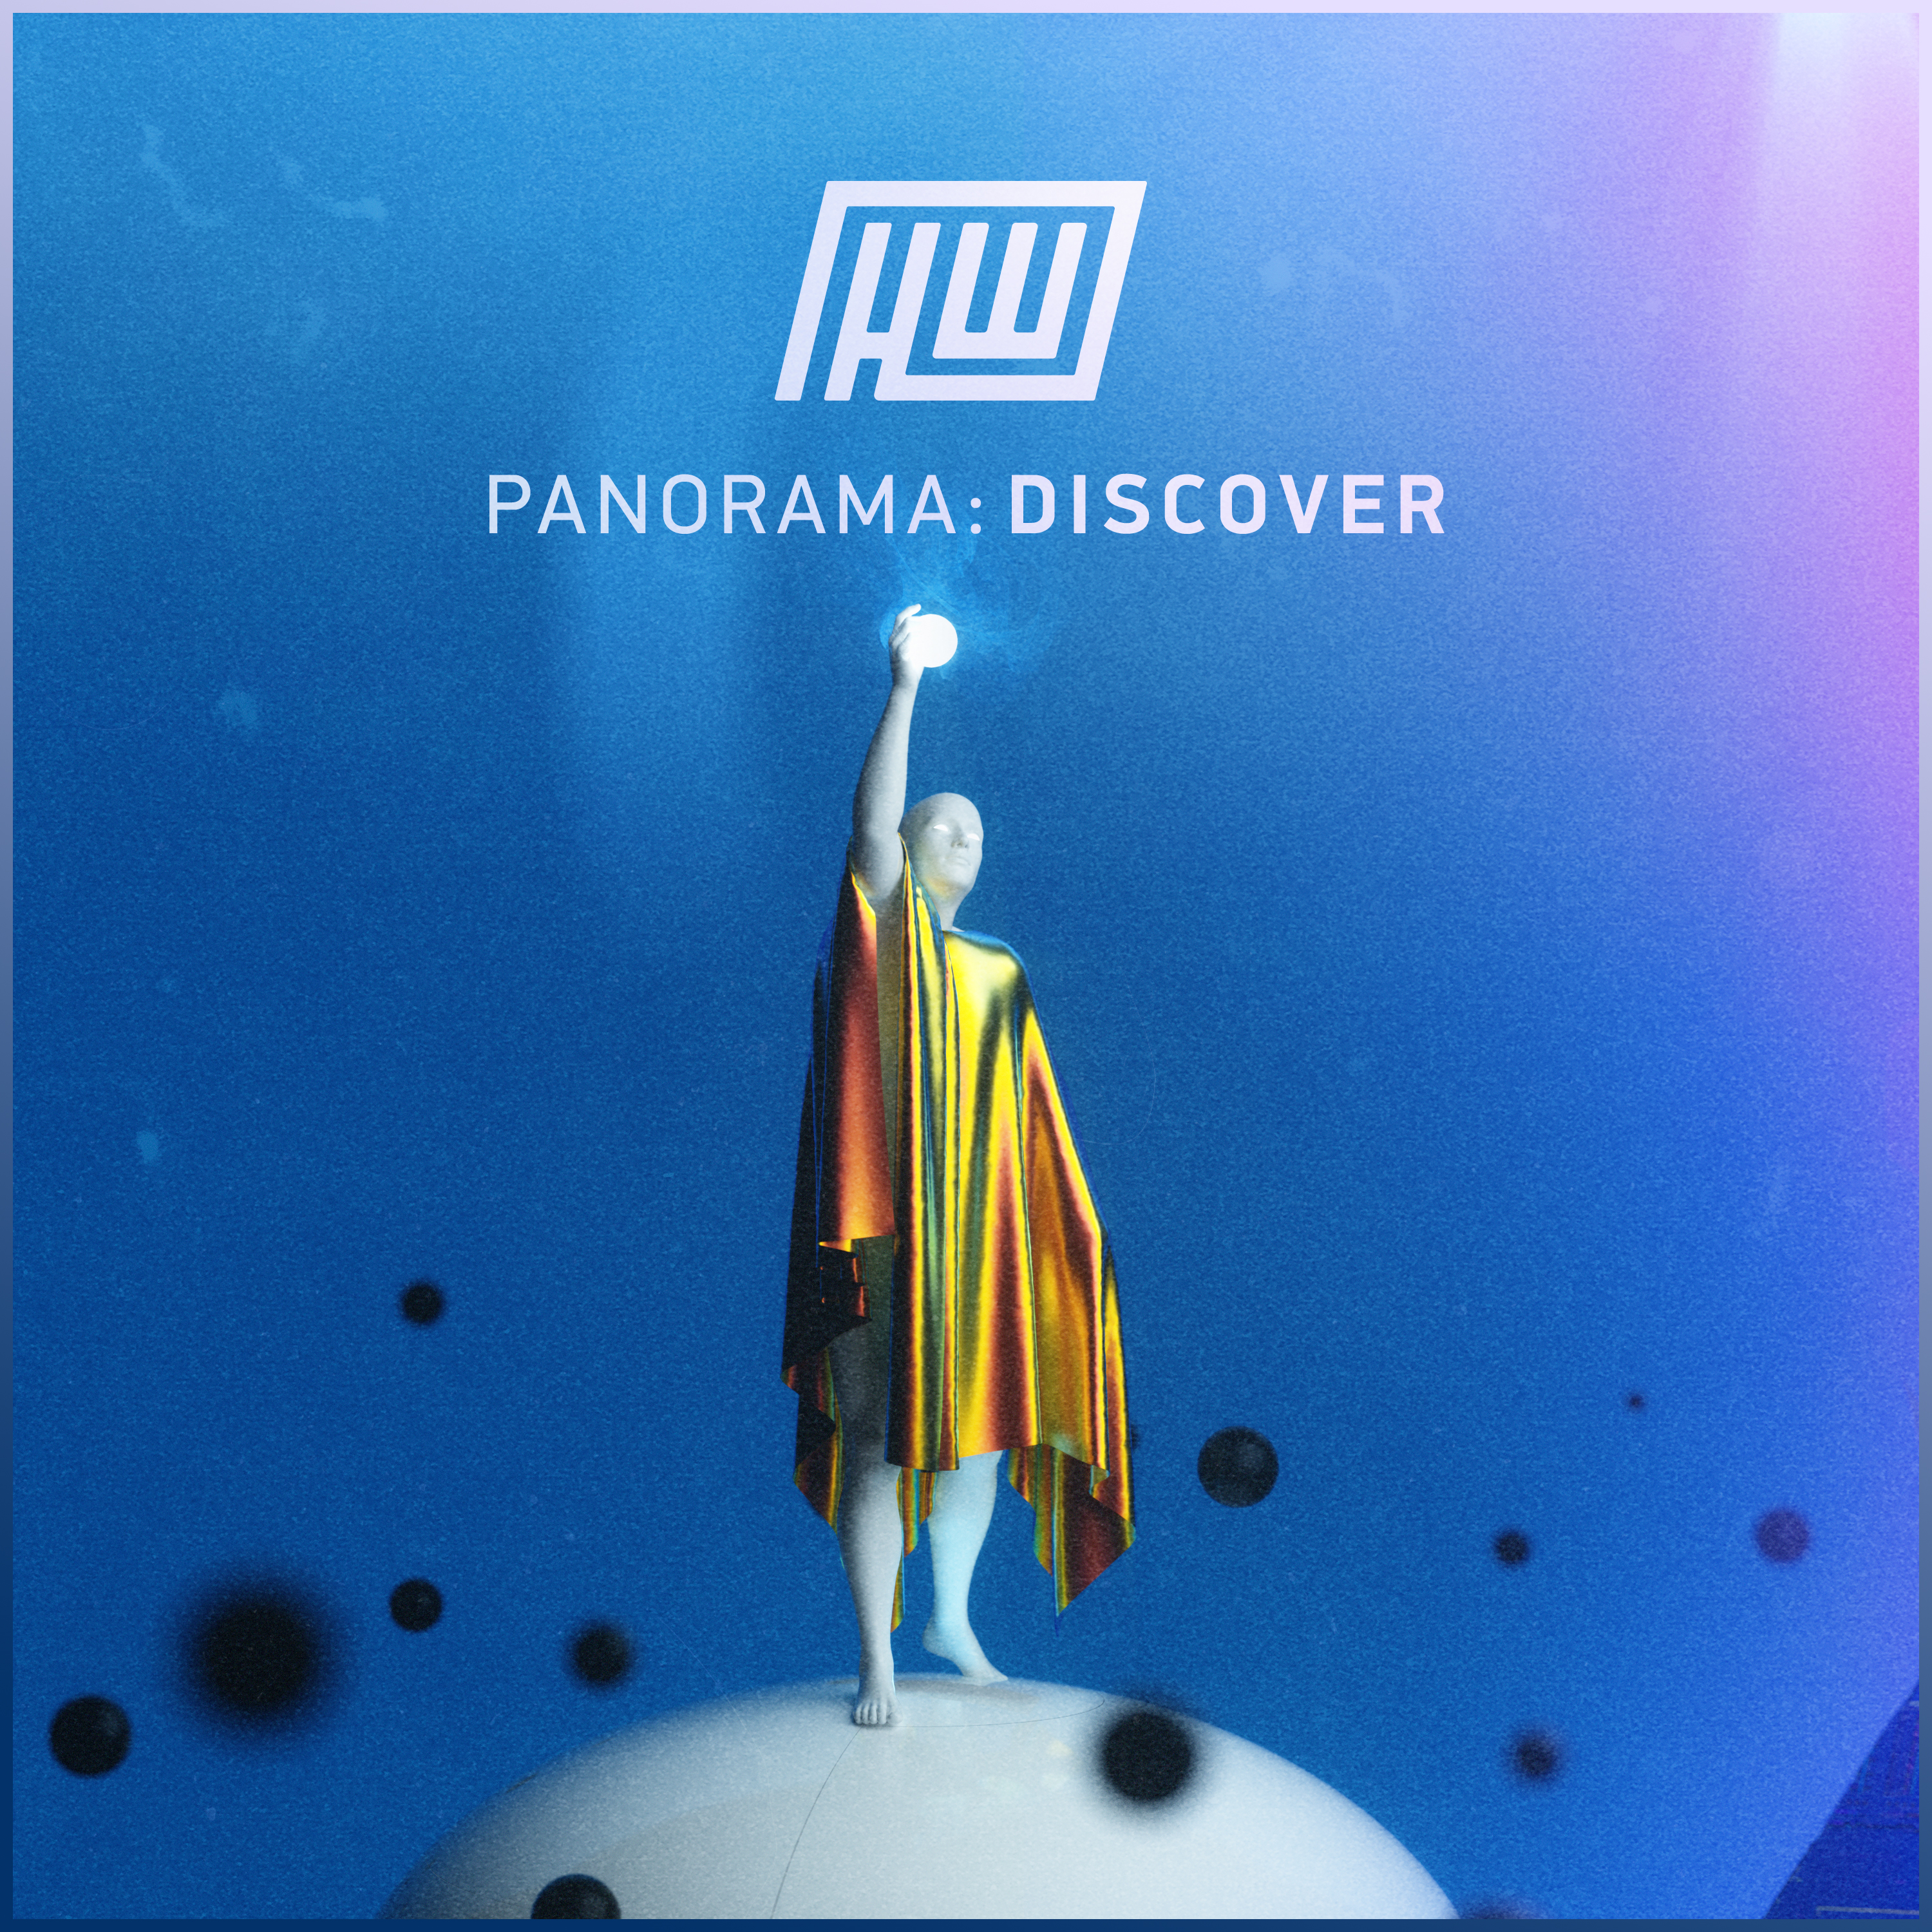 Panorama: Discovery